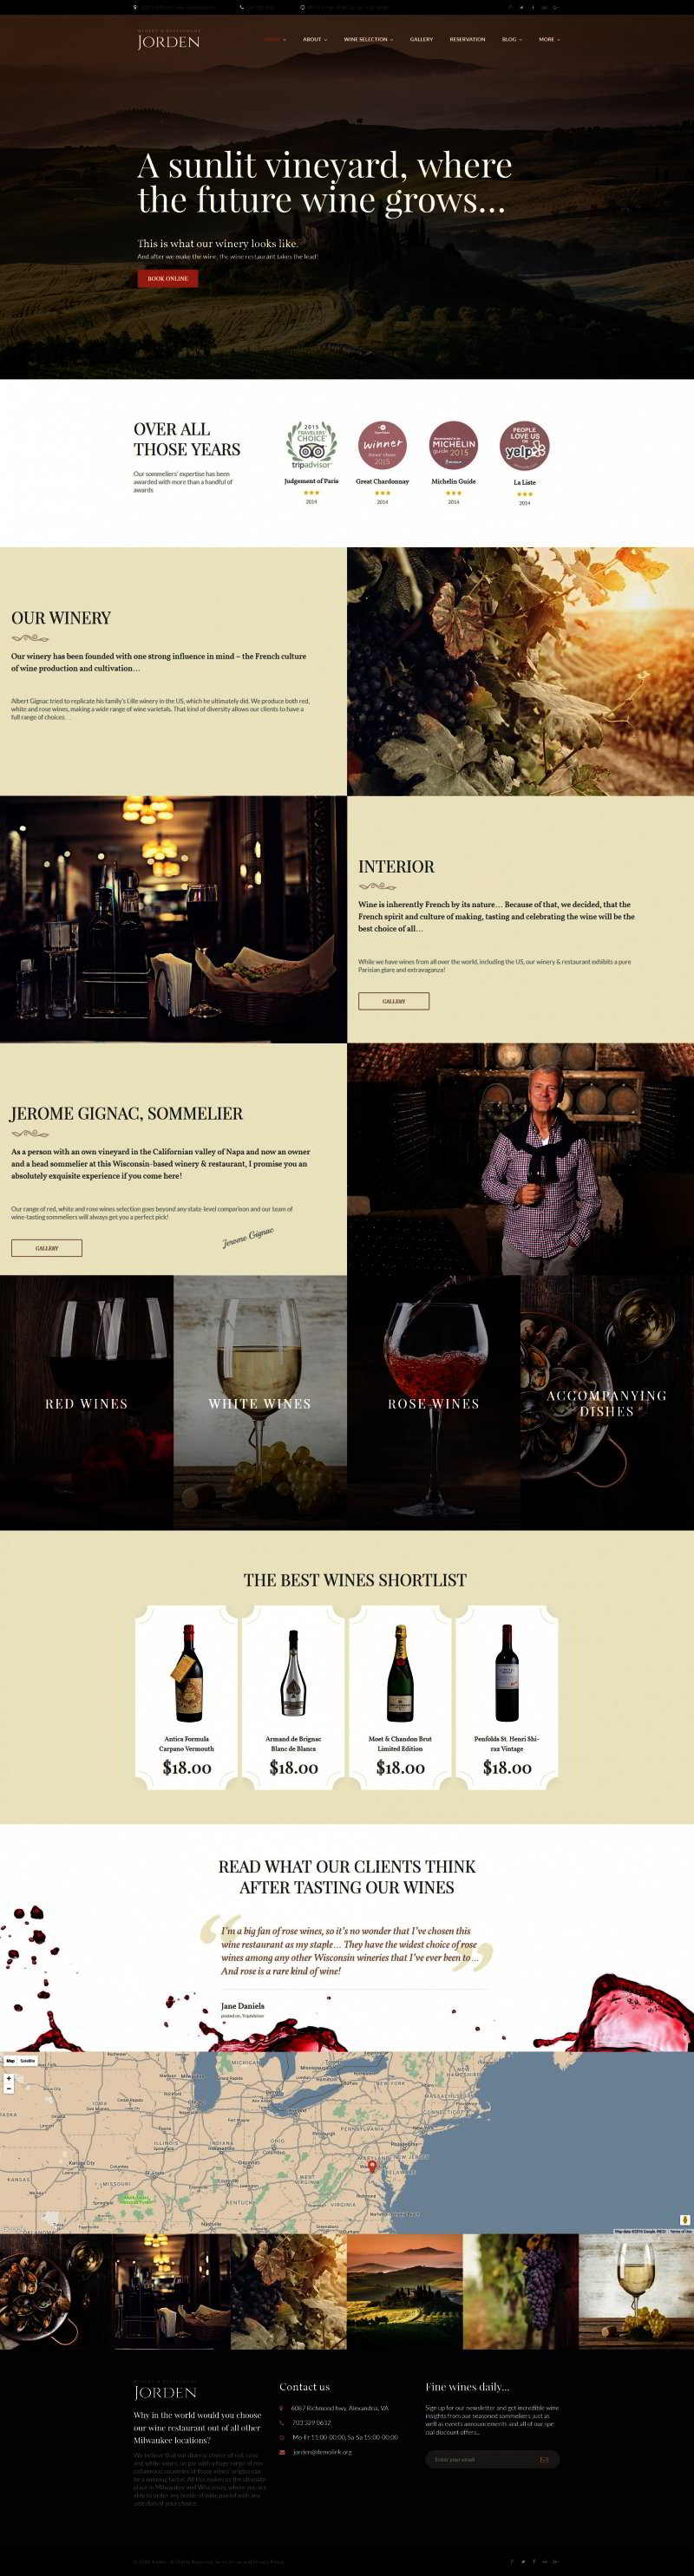 Jorden - Wine & Winery WordPress Theme